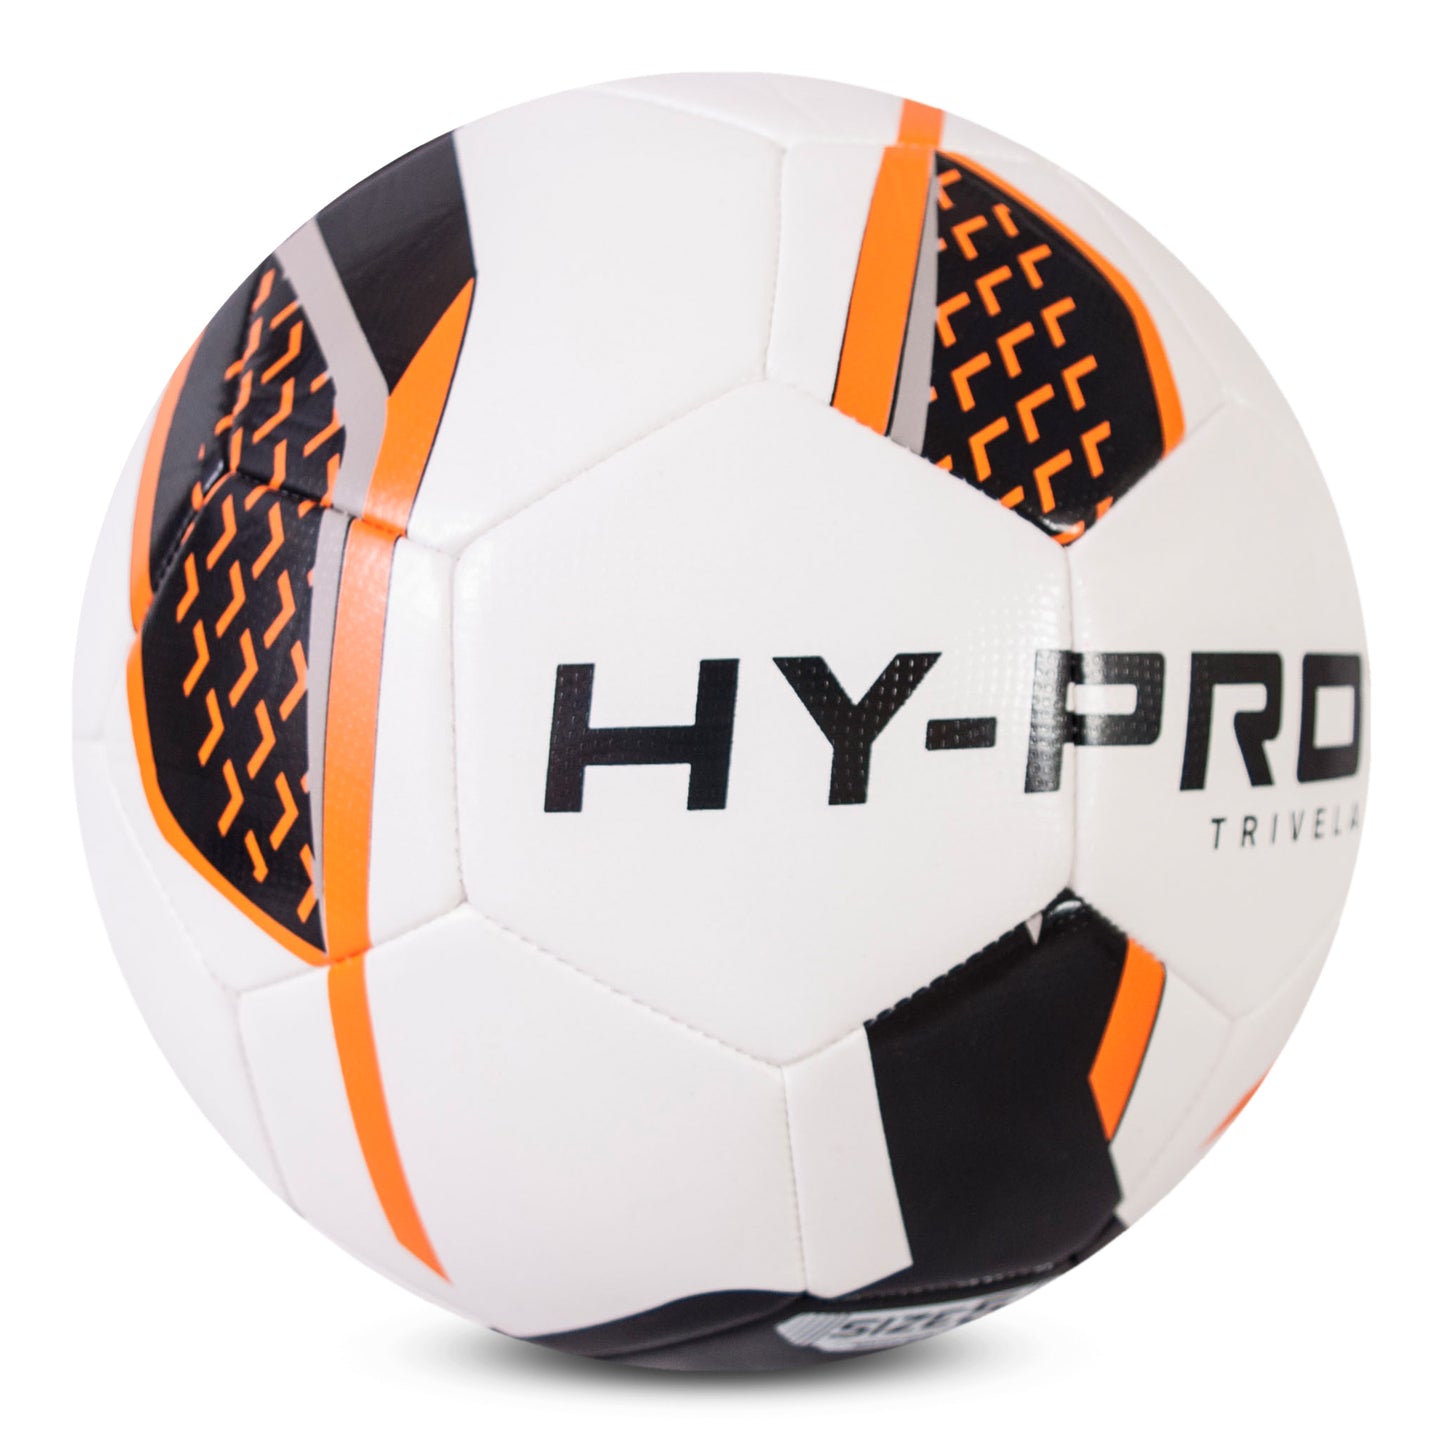 Hy-Pro Trivela Match Football